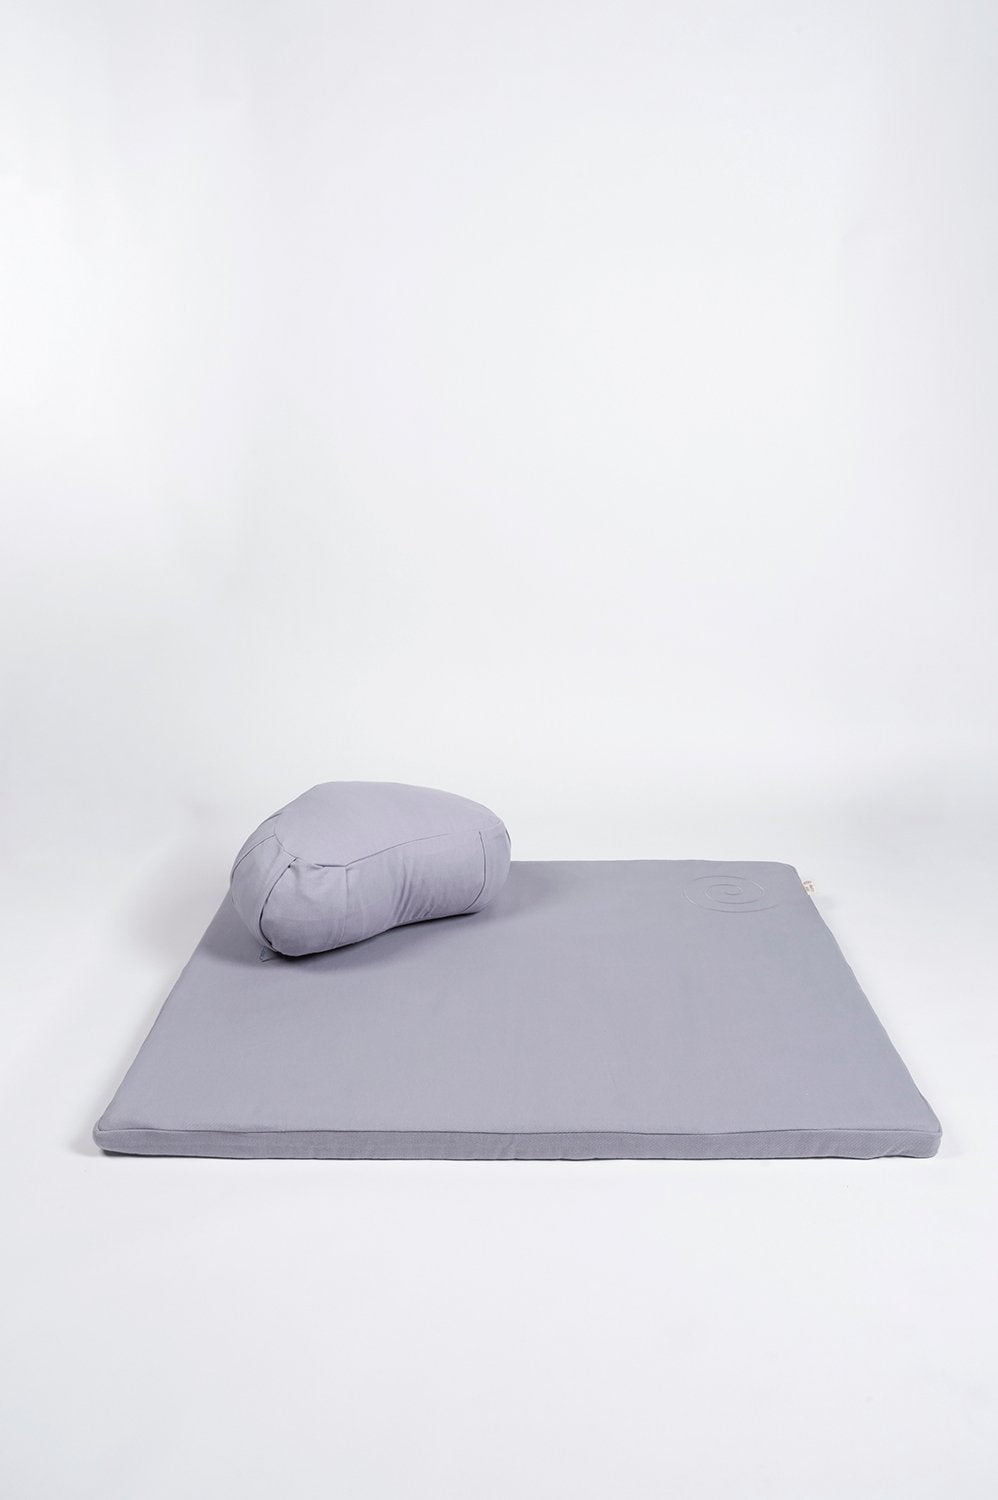 Buy Meditation Mat & Zafu Set, Meditation Cushions